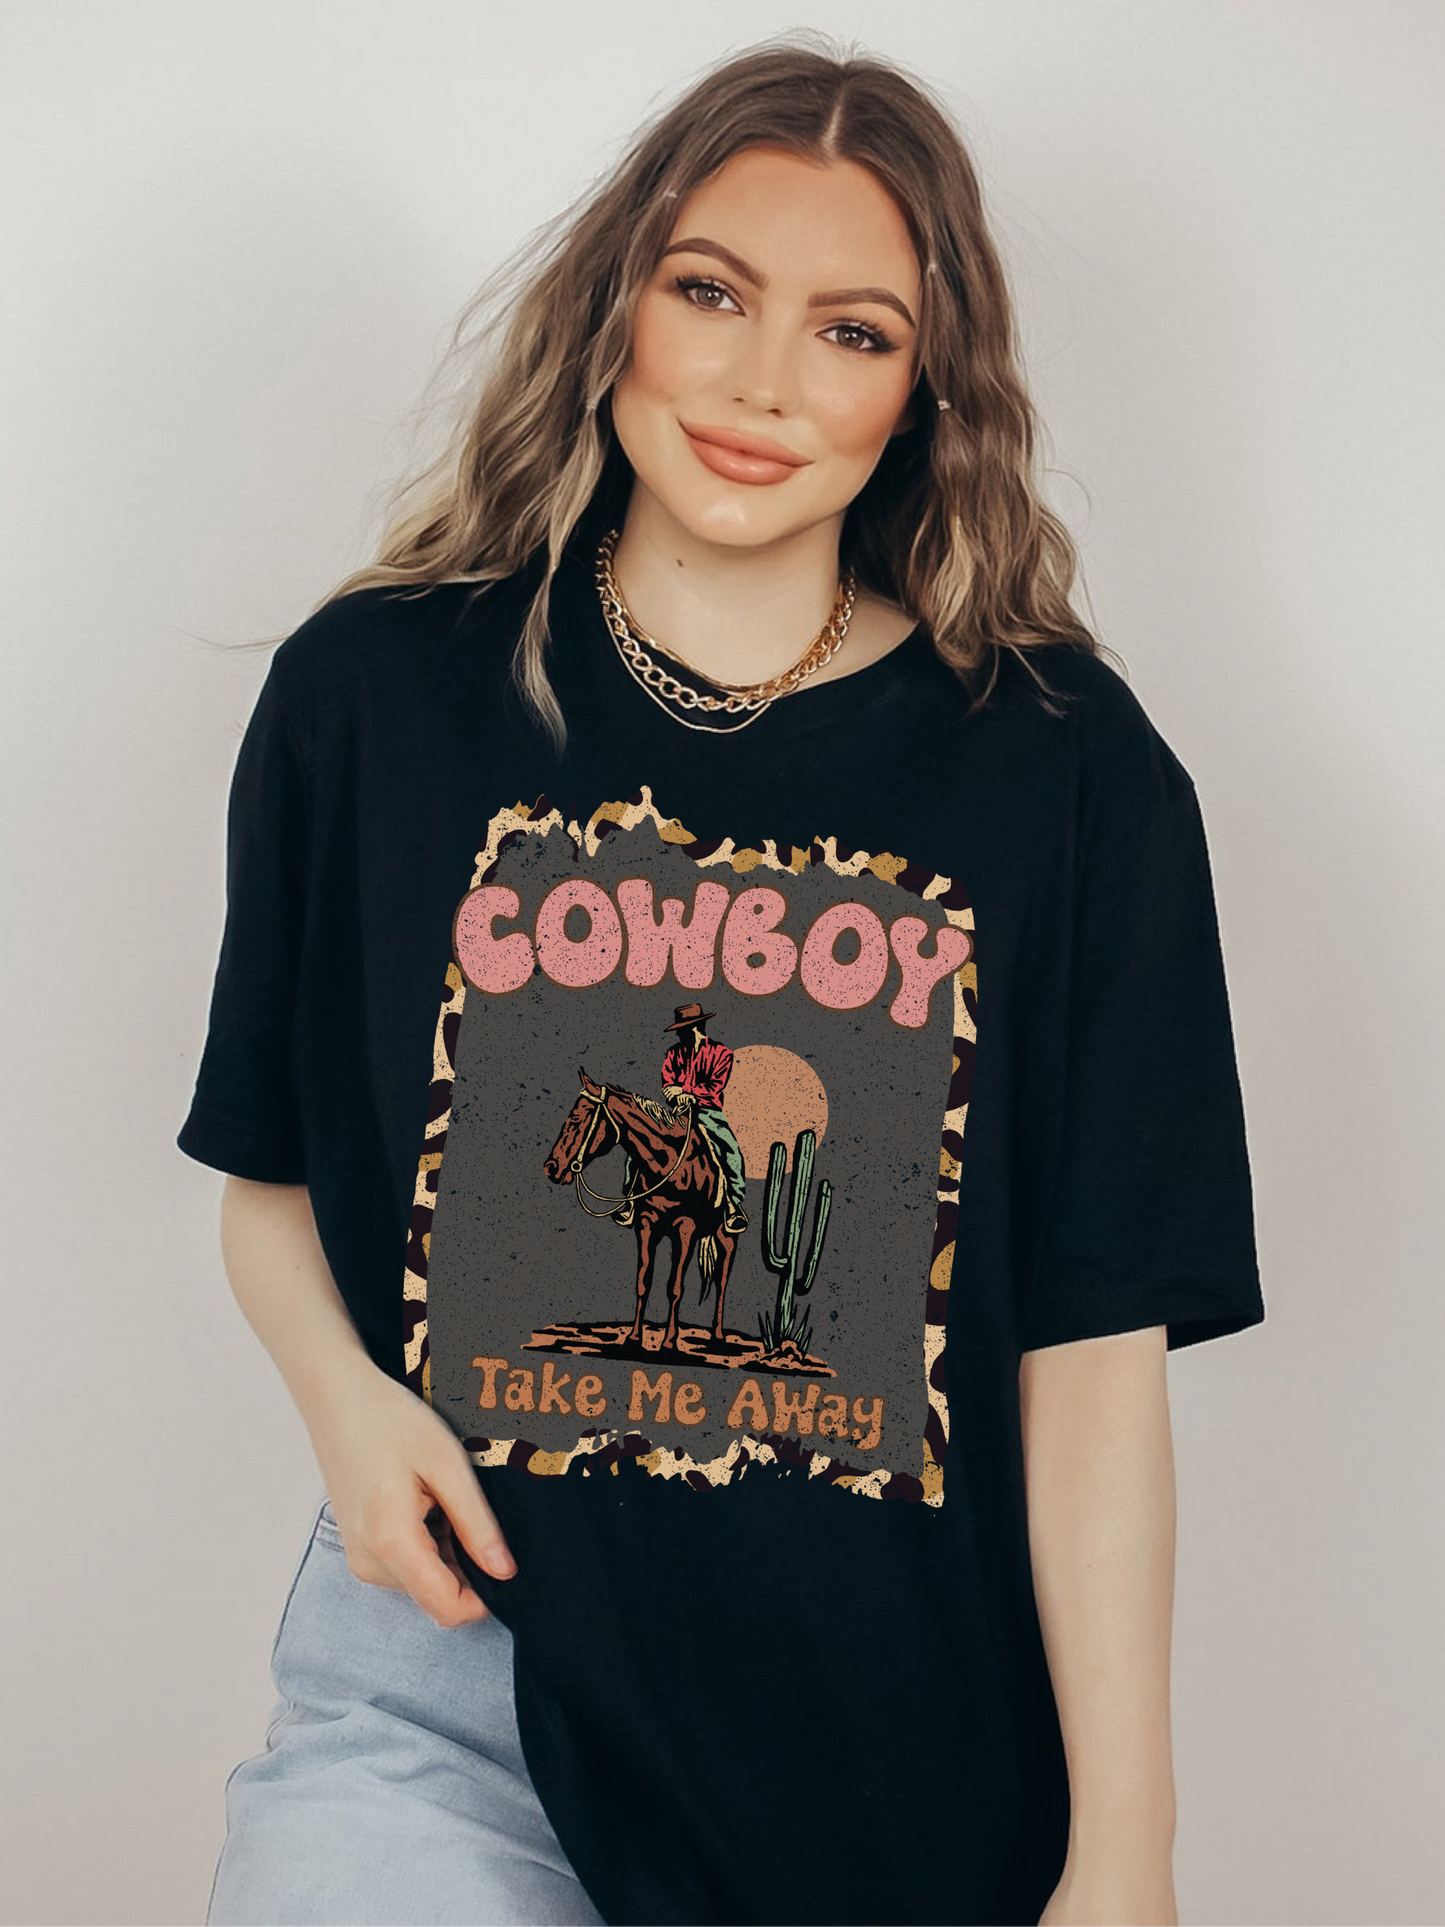 Cowboy Take Me Away Shirt